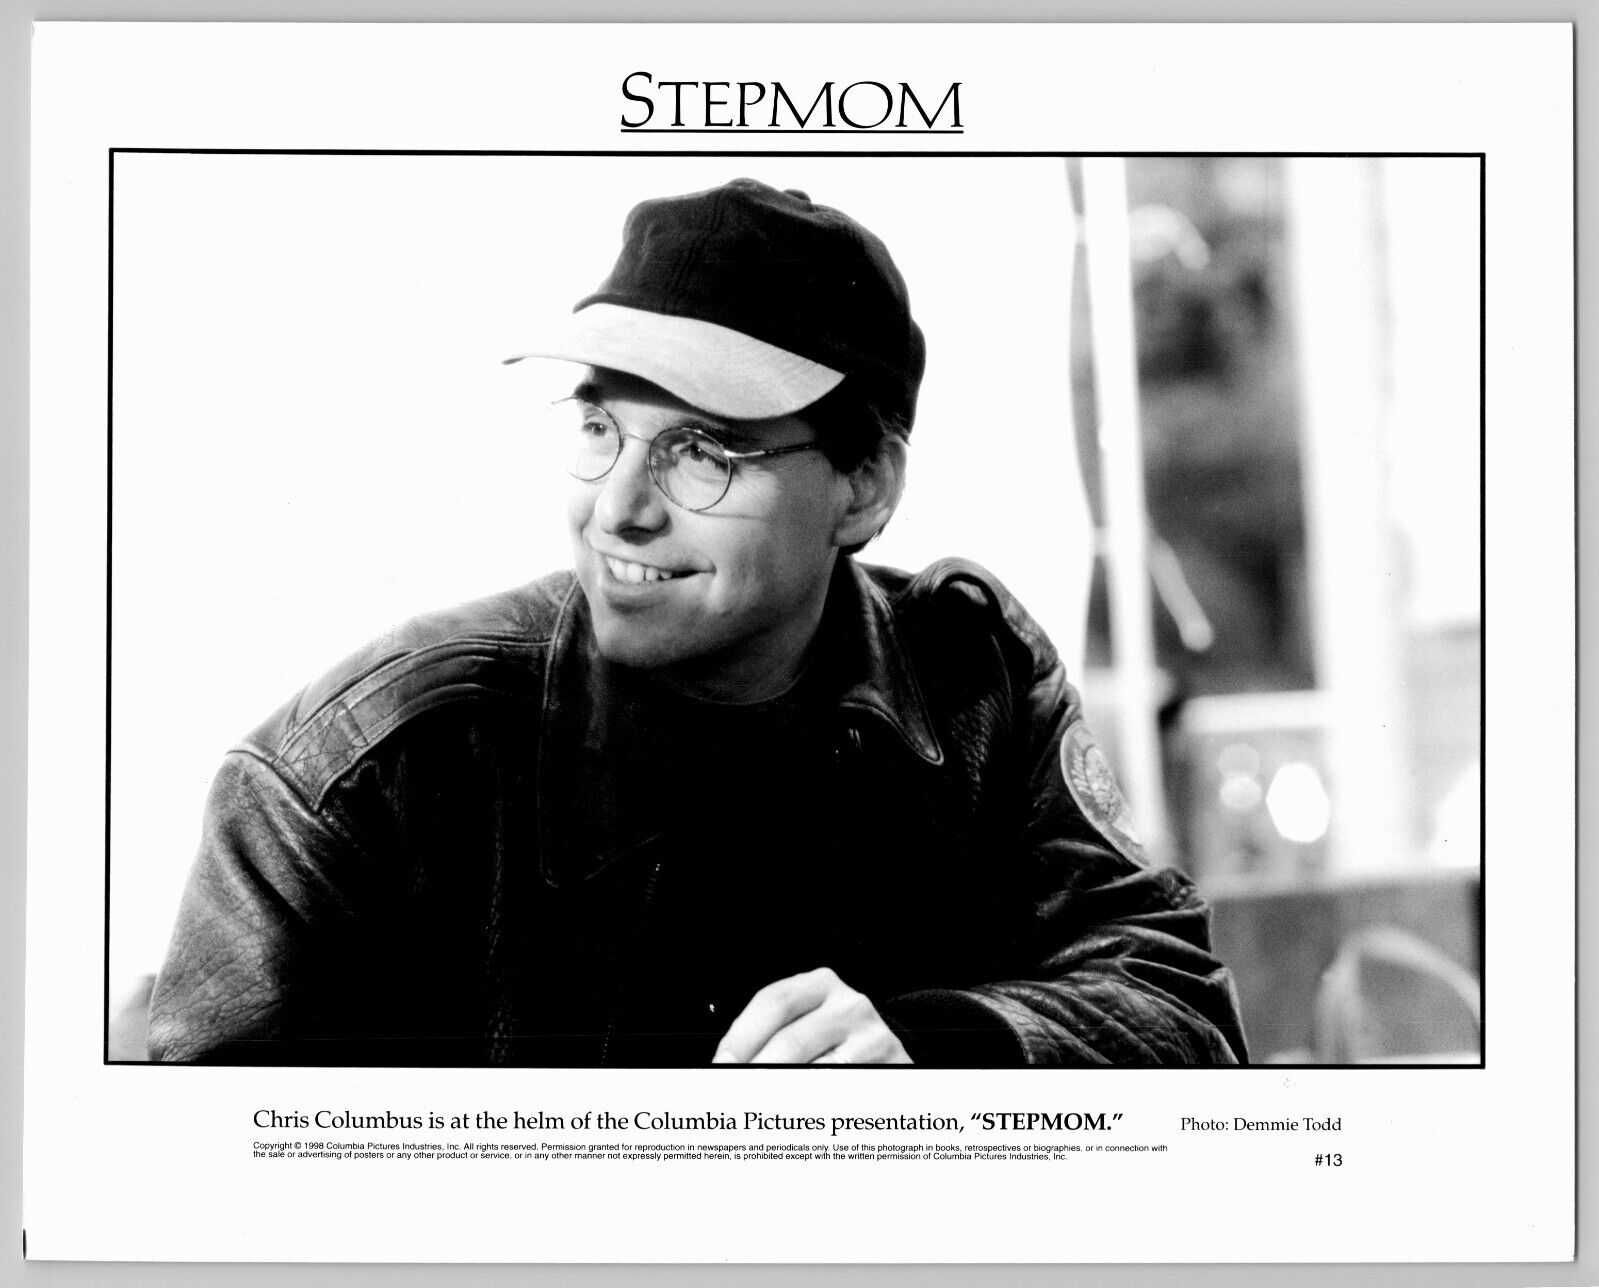 Stepmom 1998 Movie Chris Columbus Director Photo 8x10